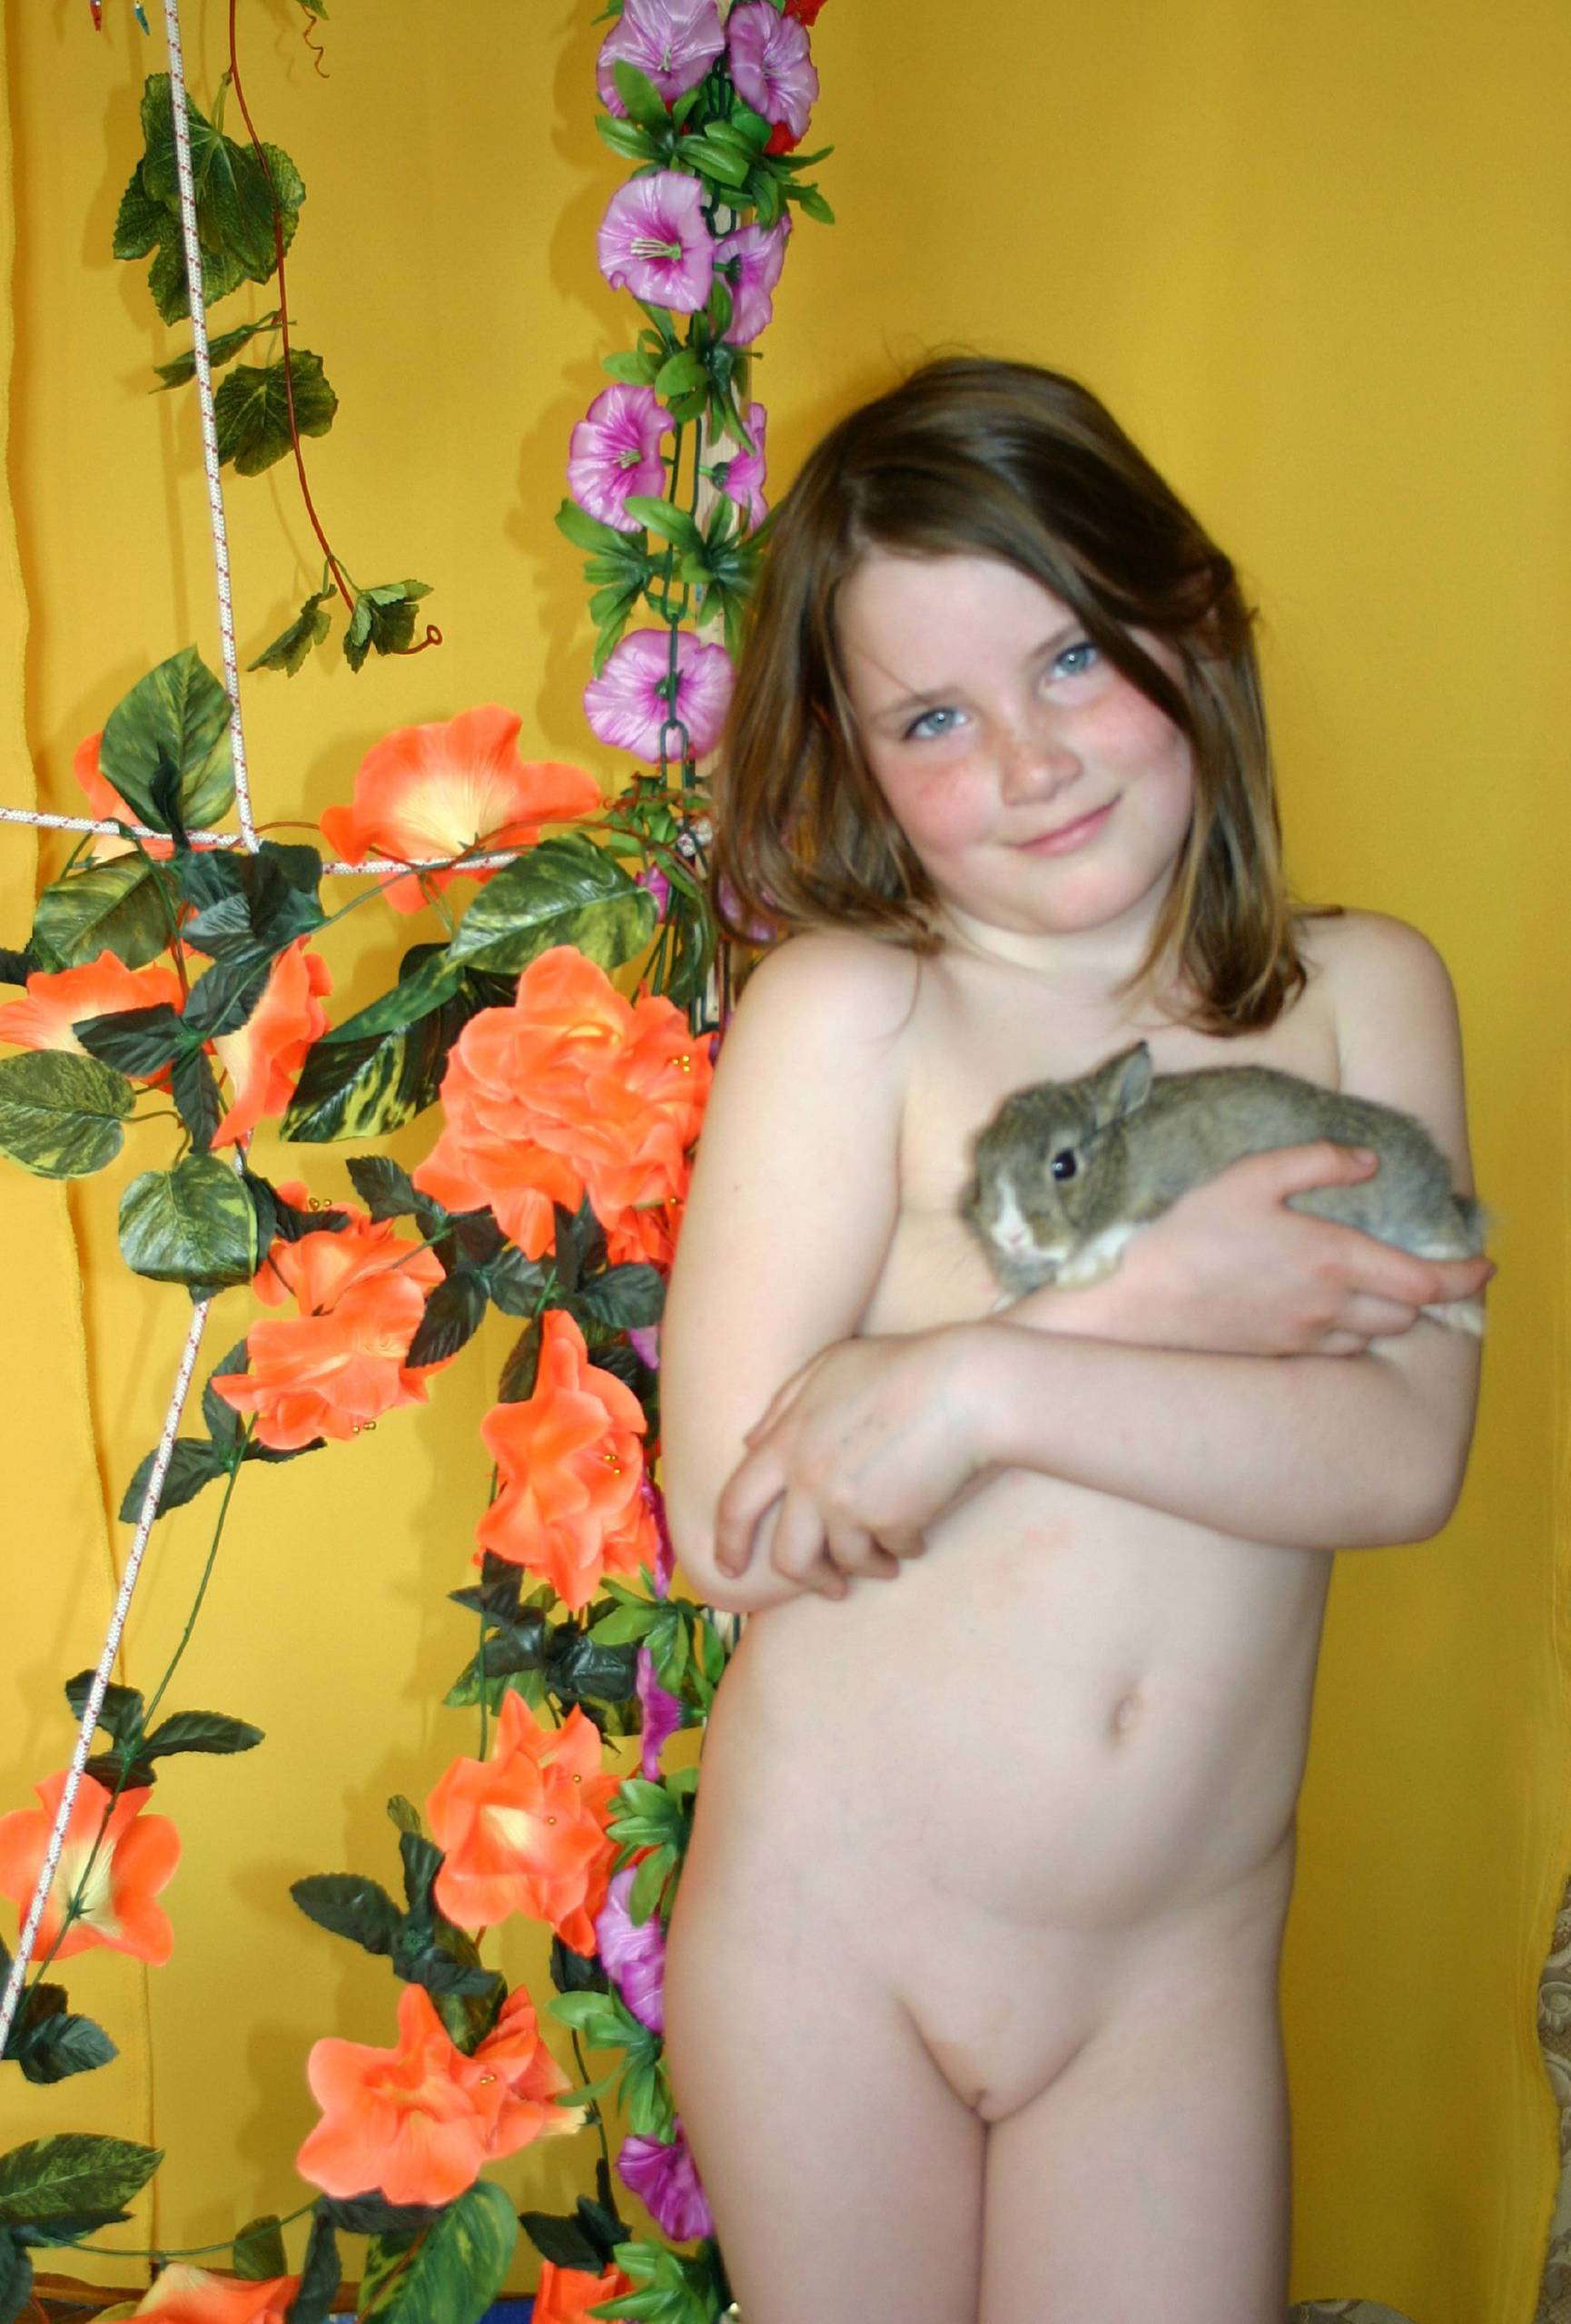 Nudist Girl and the Bunny - Pure Family Nudism - 2